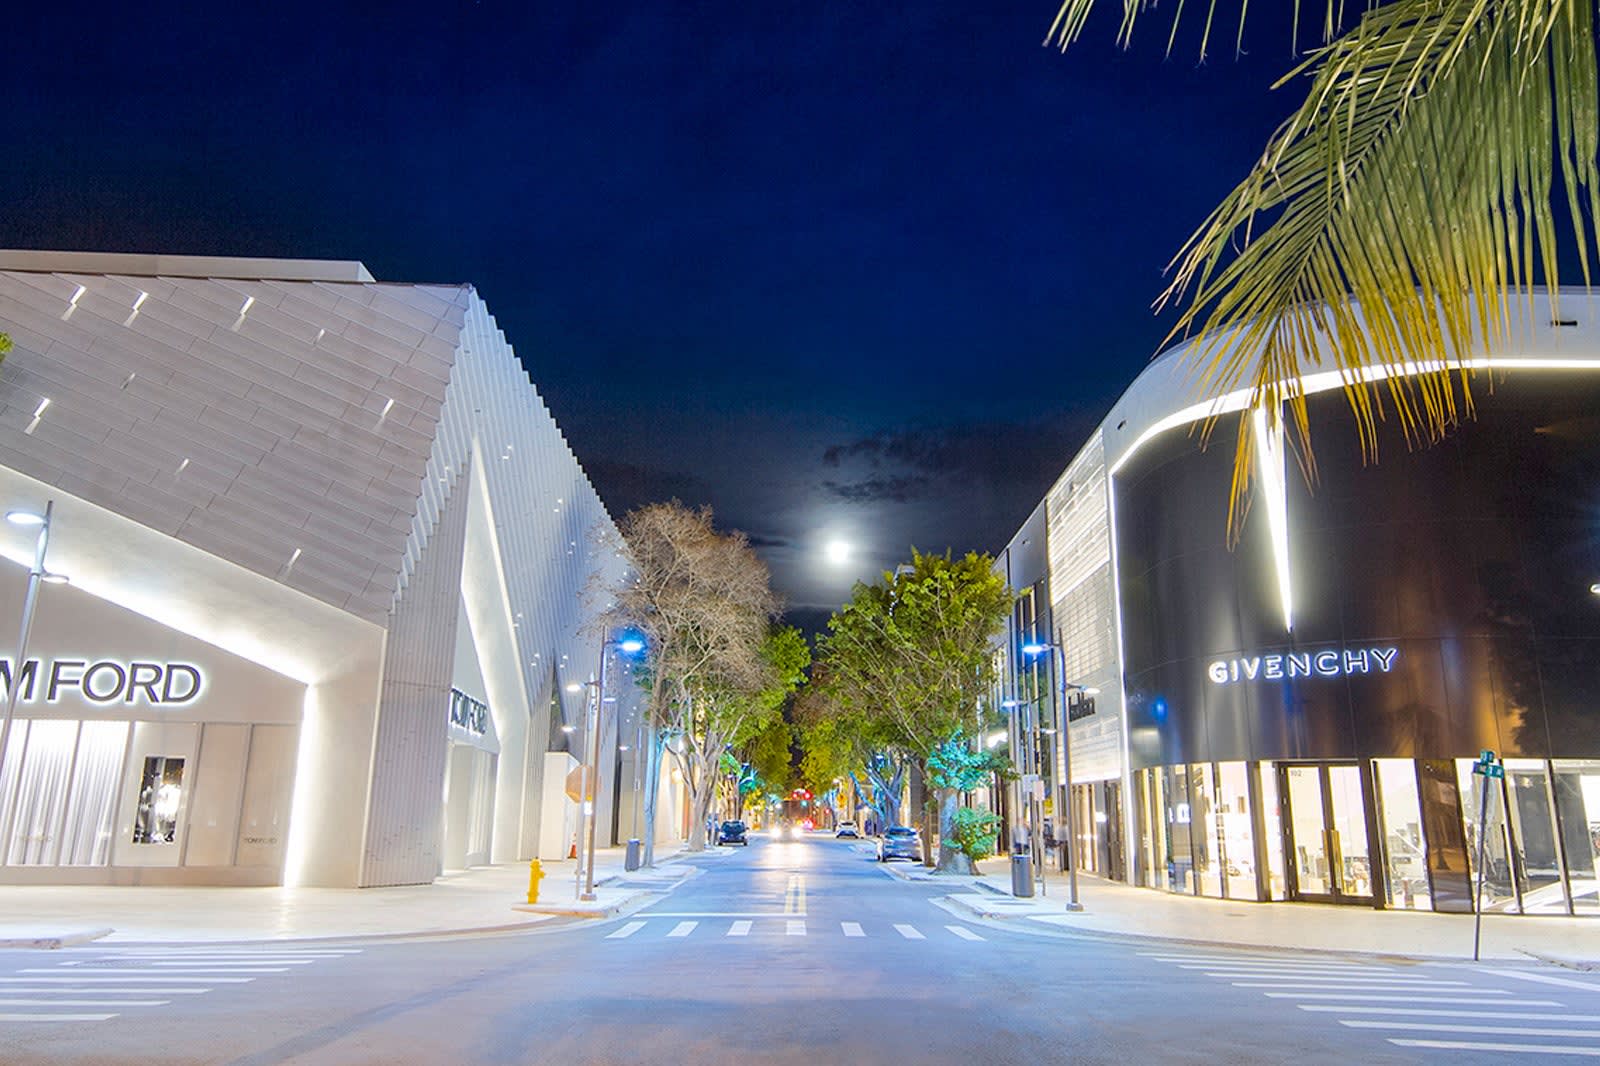 Miami Design District Retail : Coastal Construction